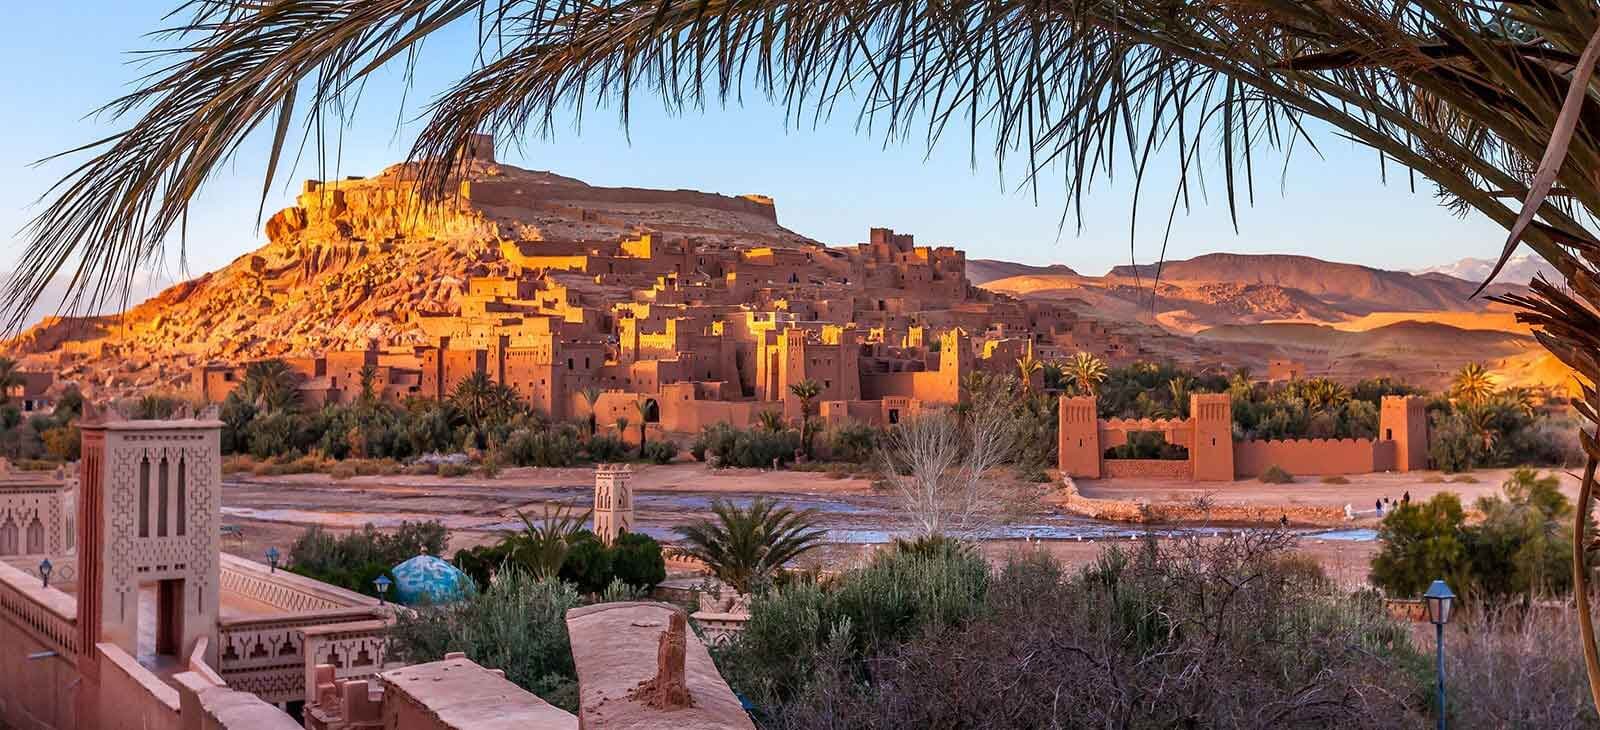 Ourzazat -hollywood of morocco